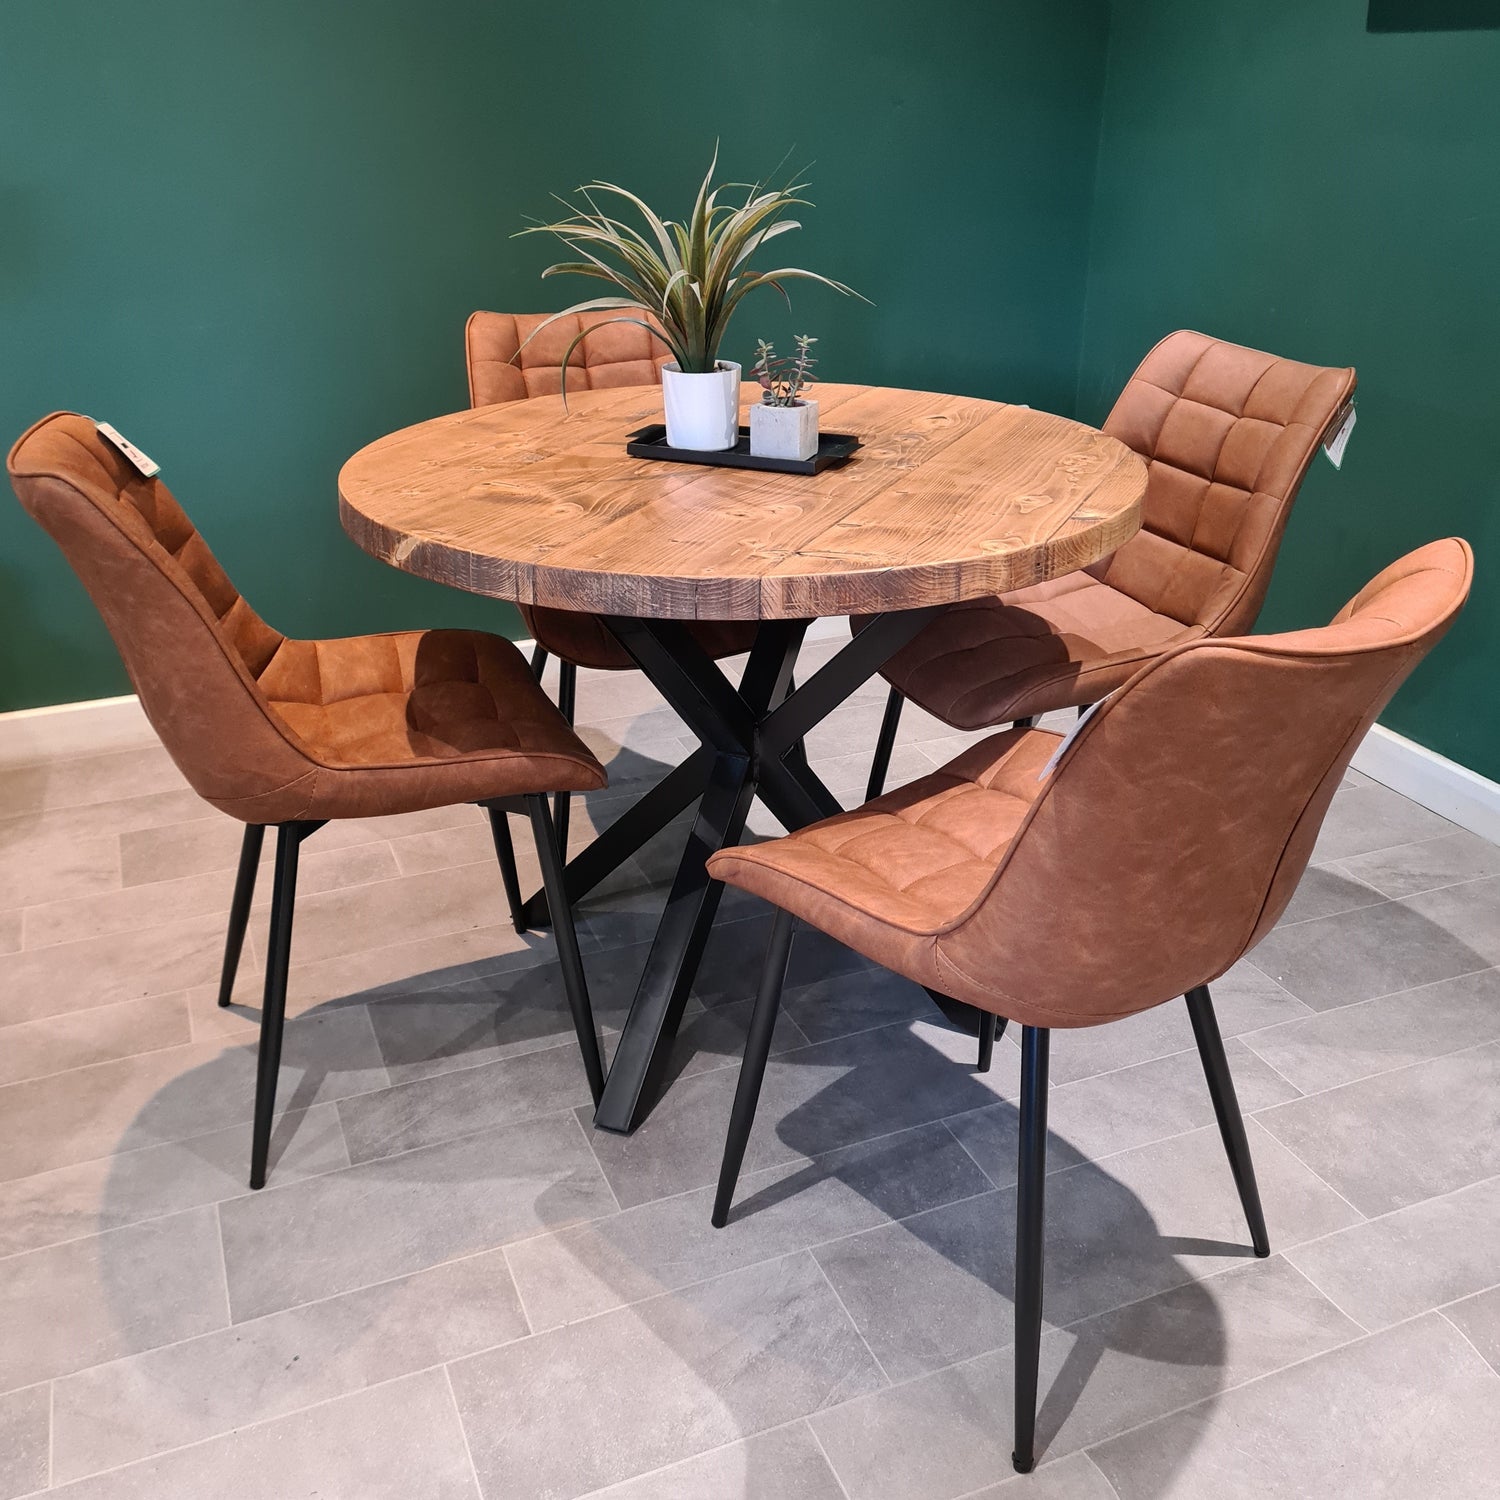 Rustic Reclaimed Round Dining Table - Steel crossed leg Tables Masterplank UK   